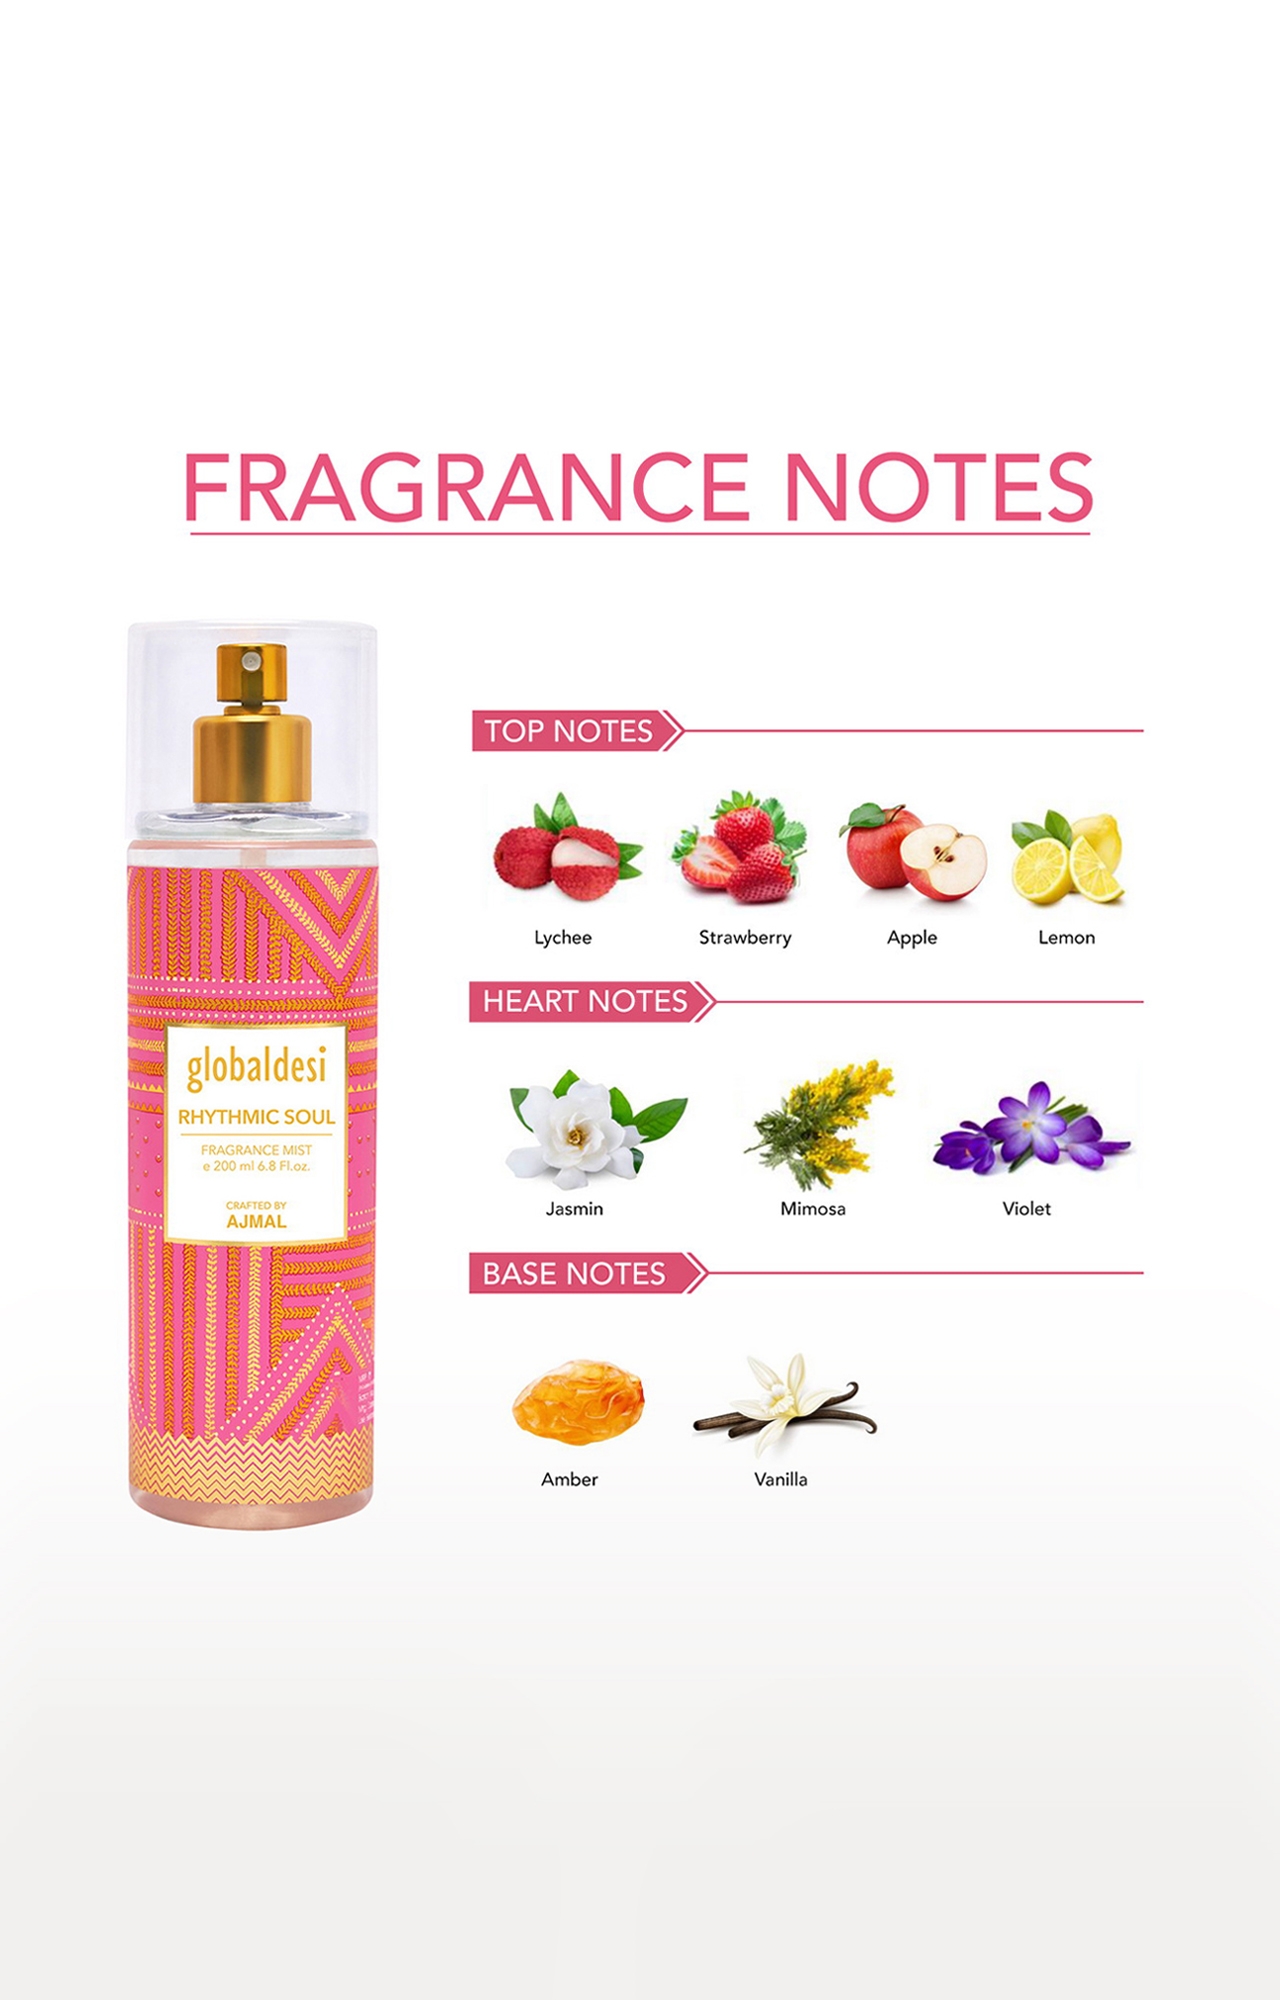 Global Desi Rhythmic Soul Body Mist Perfume 200ML Long Lasting Scent Spray Gift For Women Crafted by Ajmal 